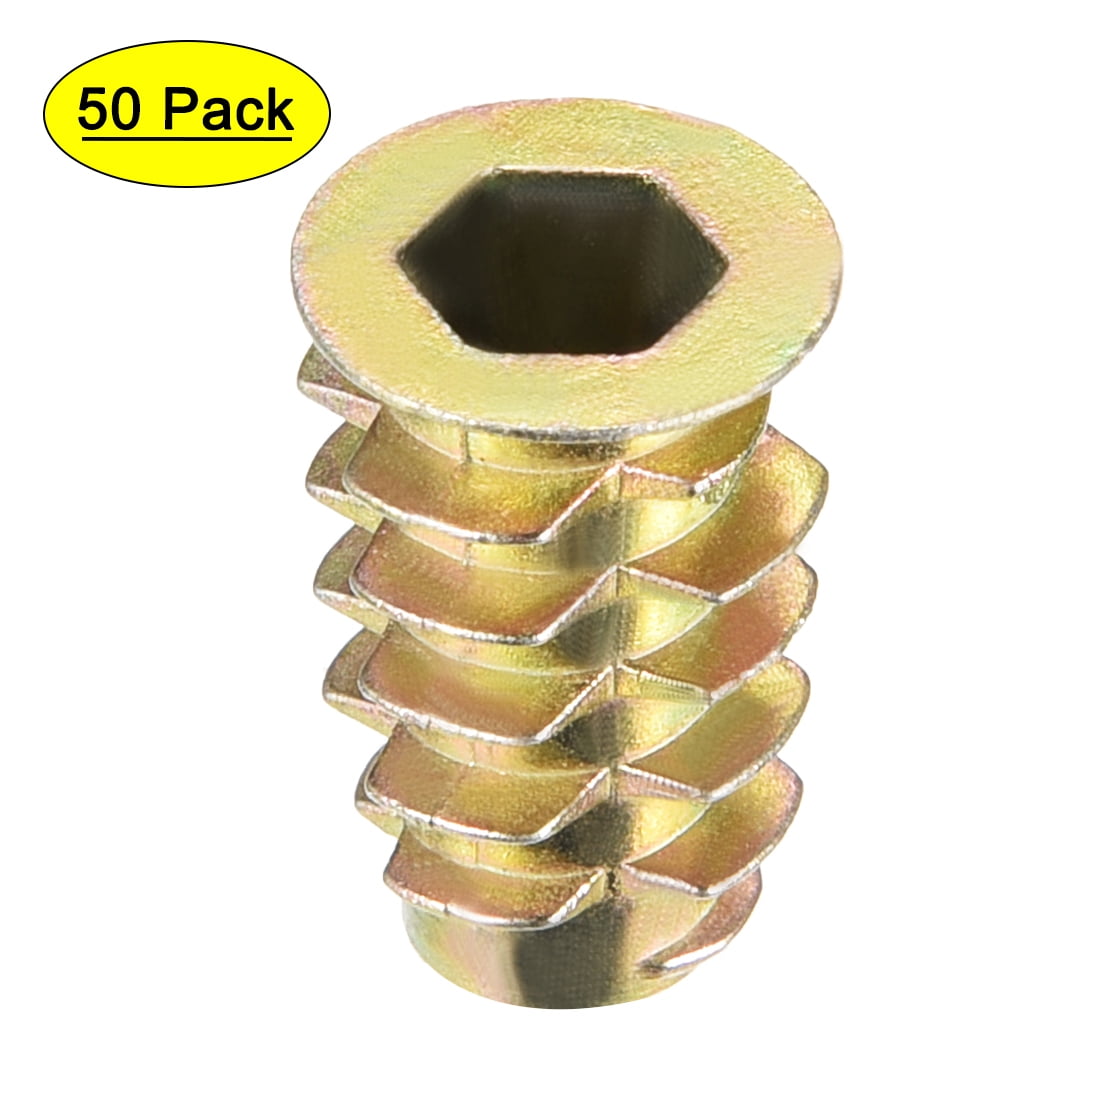 50pcs Hex Drive Head Nut Assortment Kit with Box Zinc Alloy Threaded Insert Nuts for Wood Furniture